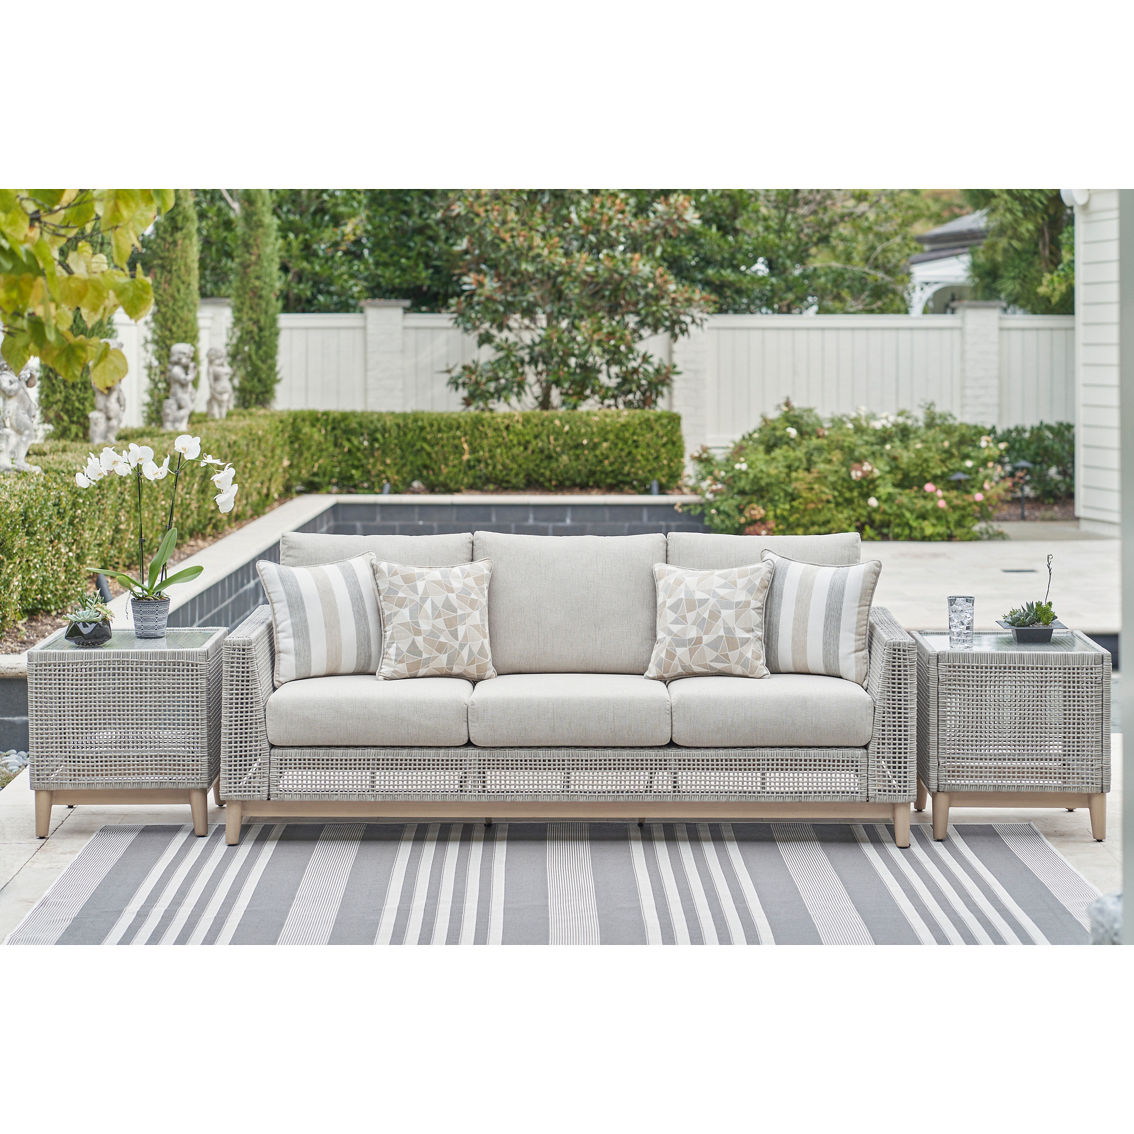 Signature Design by Ashley Seton Creek Outdoor Sofa with Cushion - Image 5 of 5